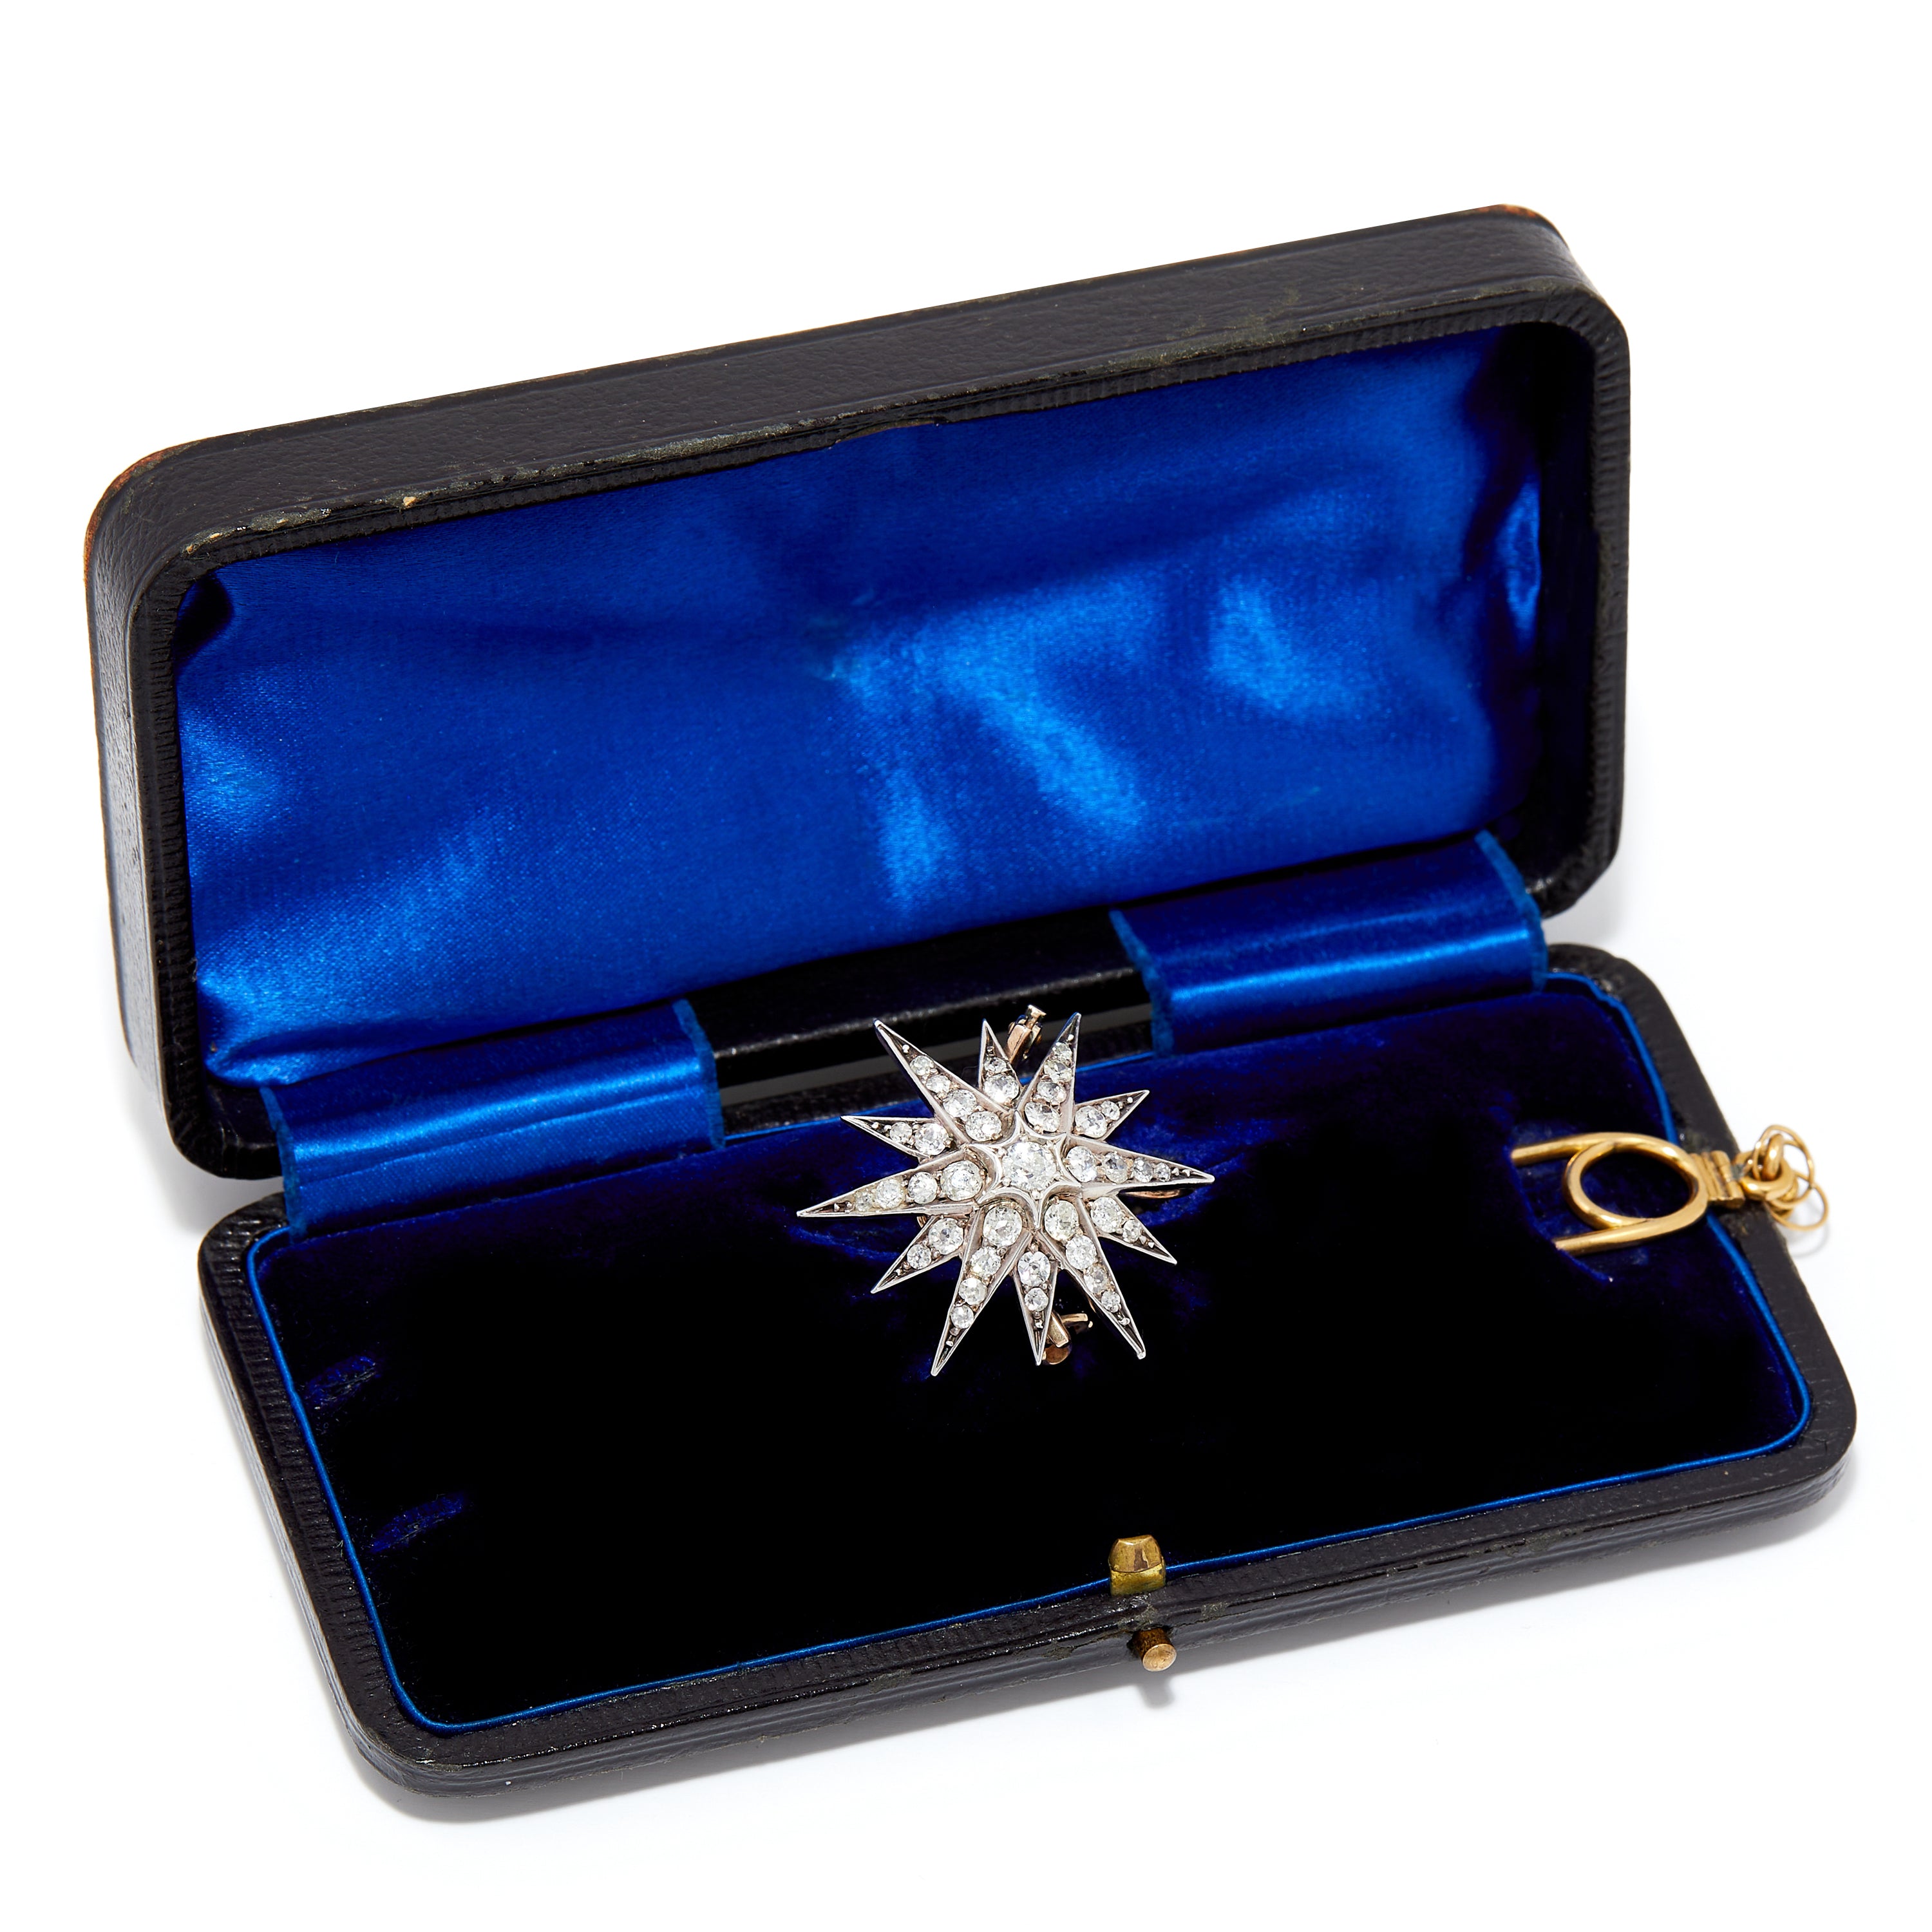 Victorian starburst diamond brooch in its original case. 